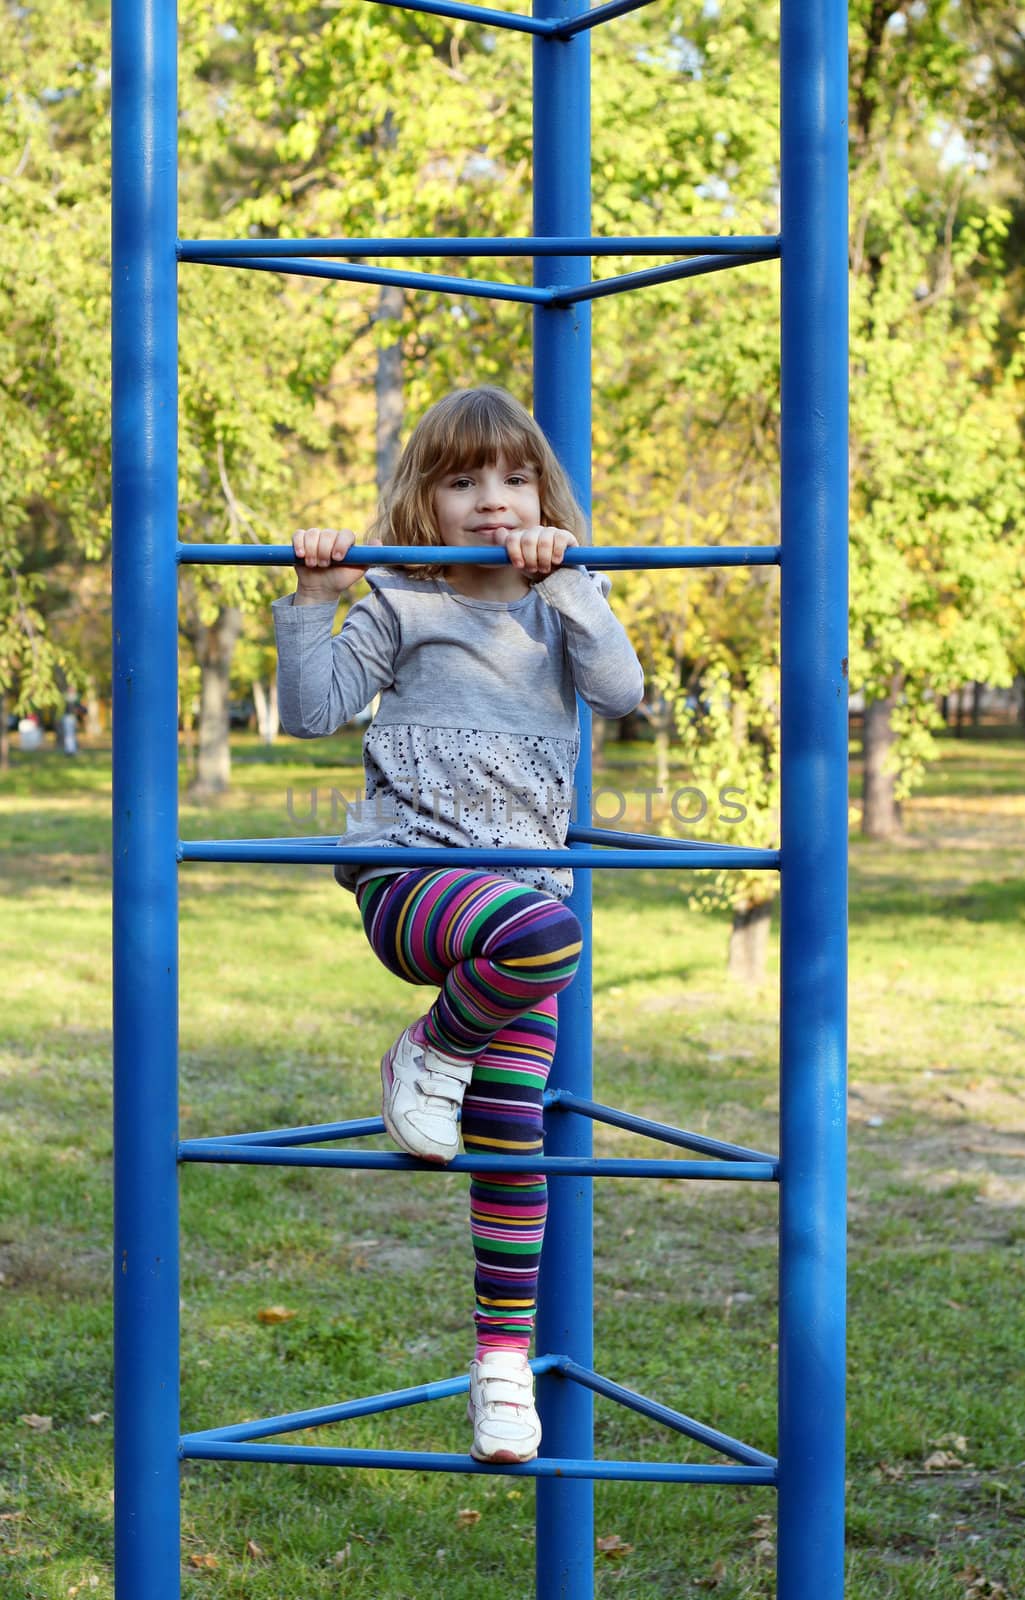 beautiful little girl on playground